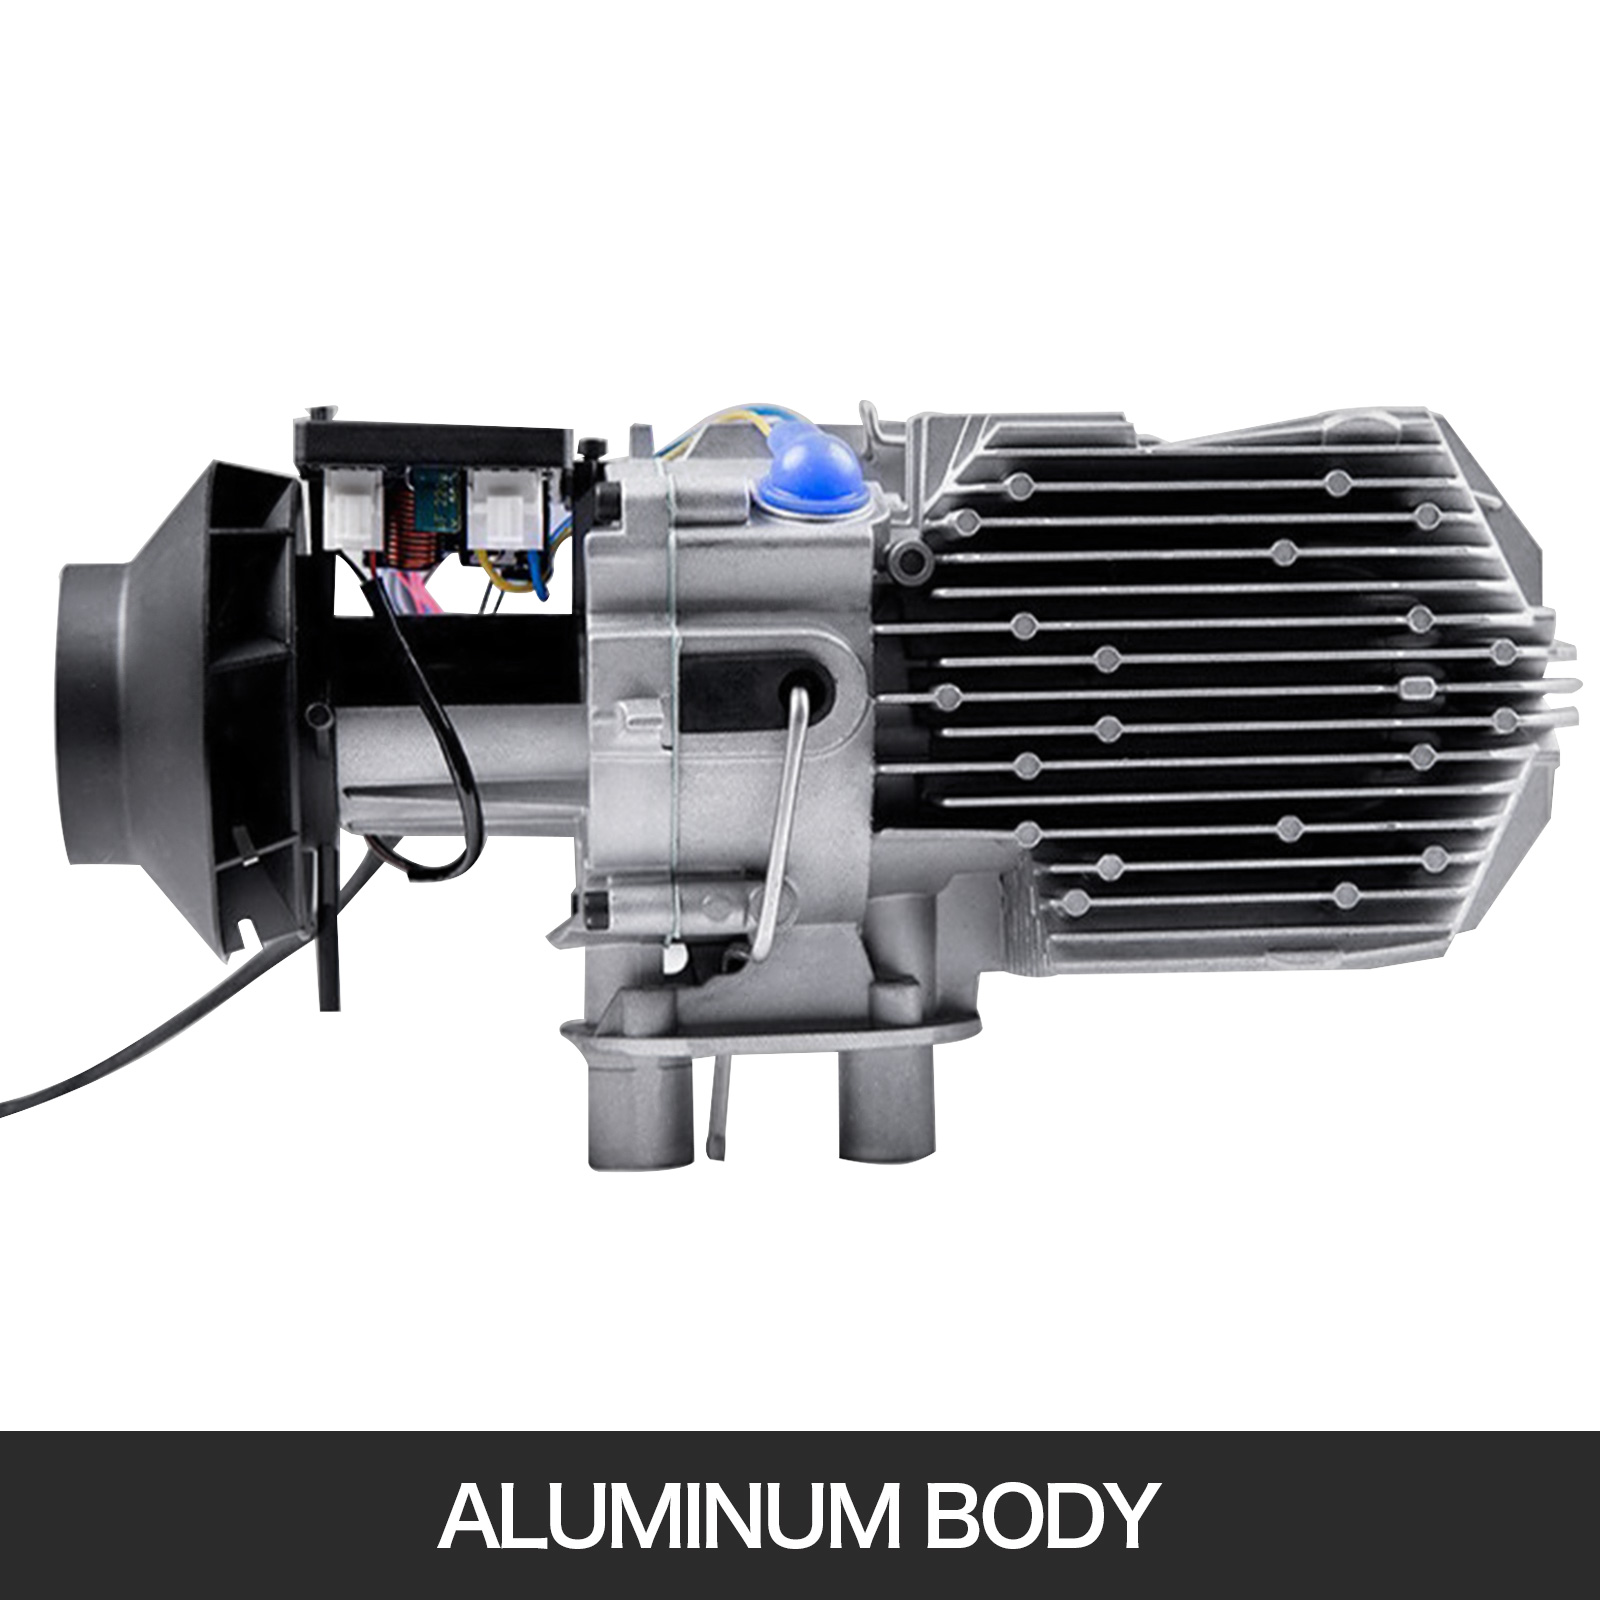 5KW Air Diesel Heater Burner w/ Gasket Combustion Chamber For Car Truck  Camper